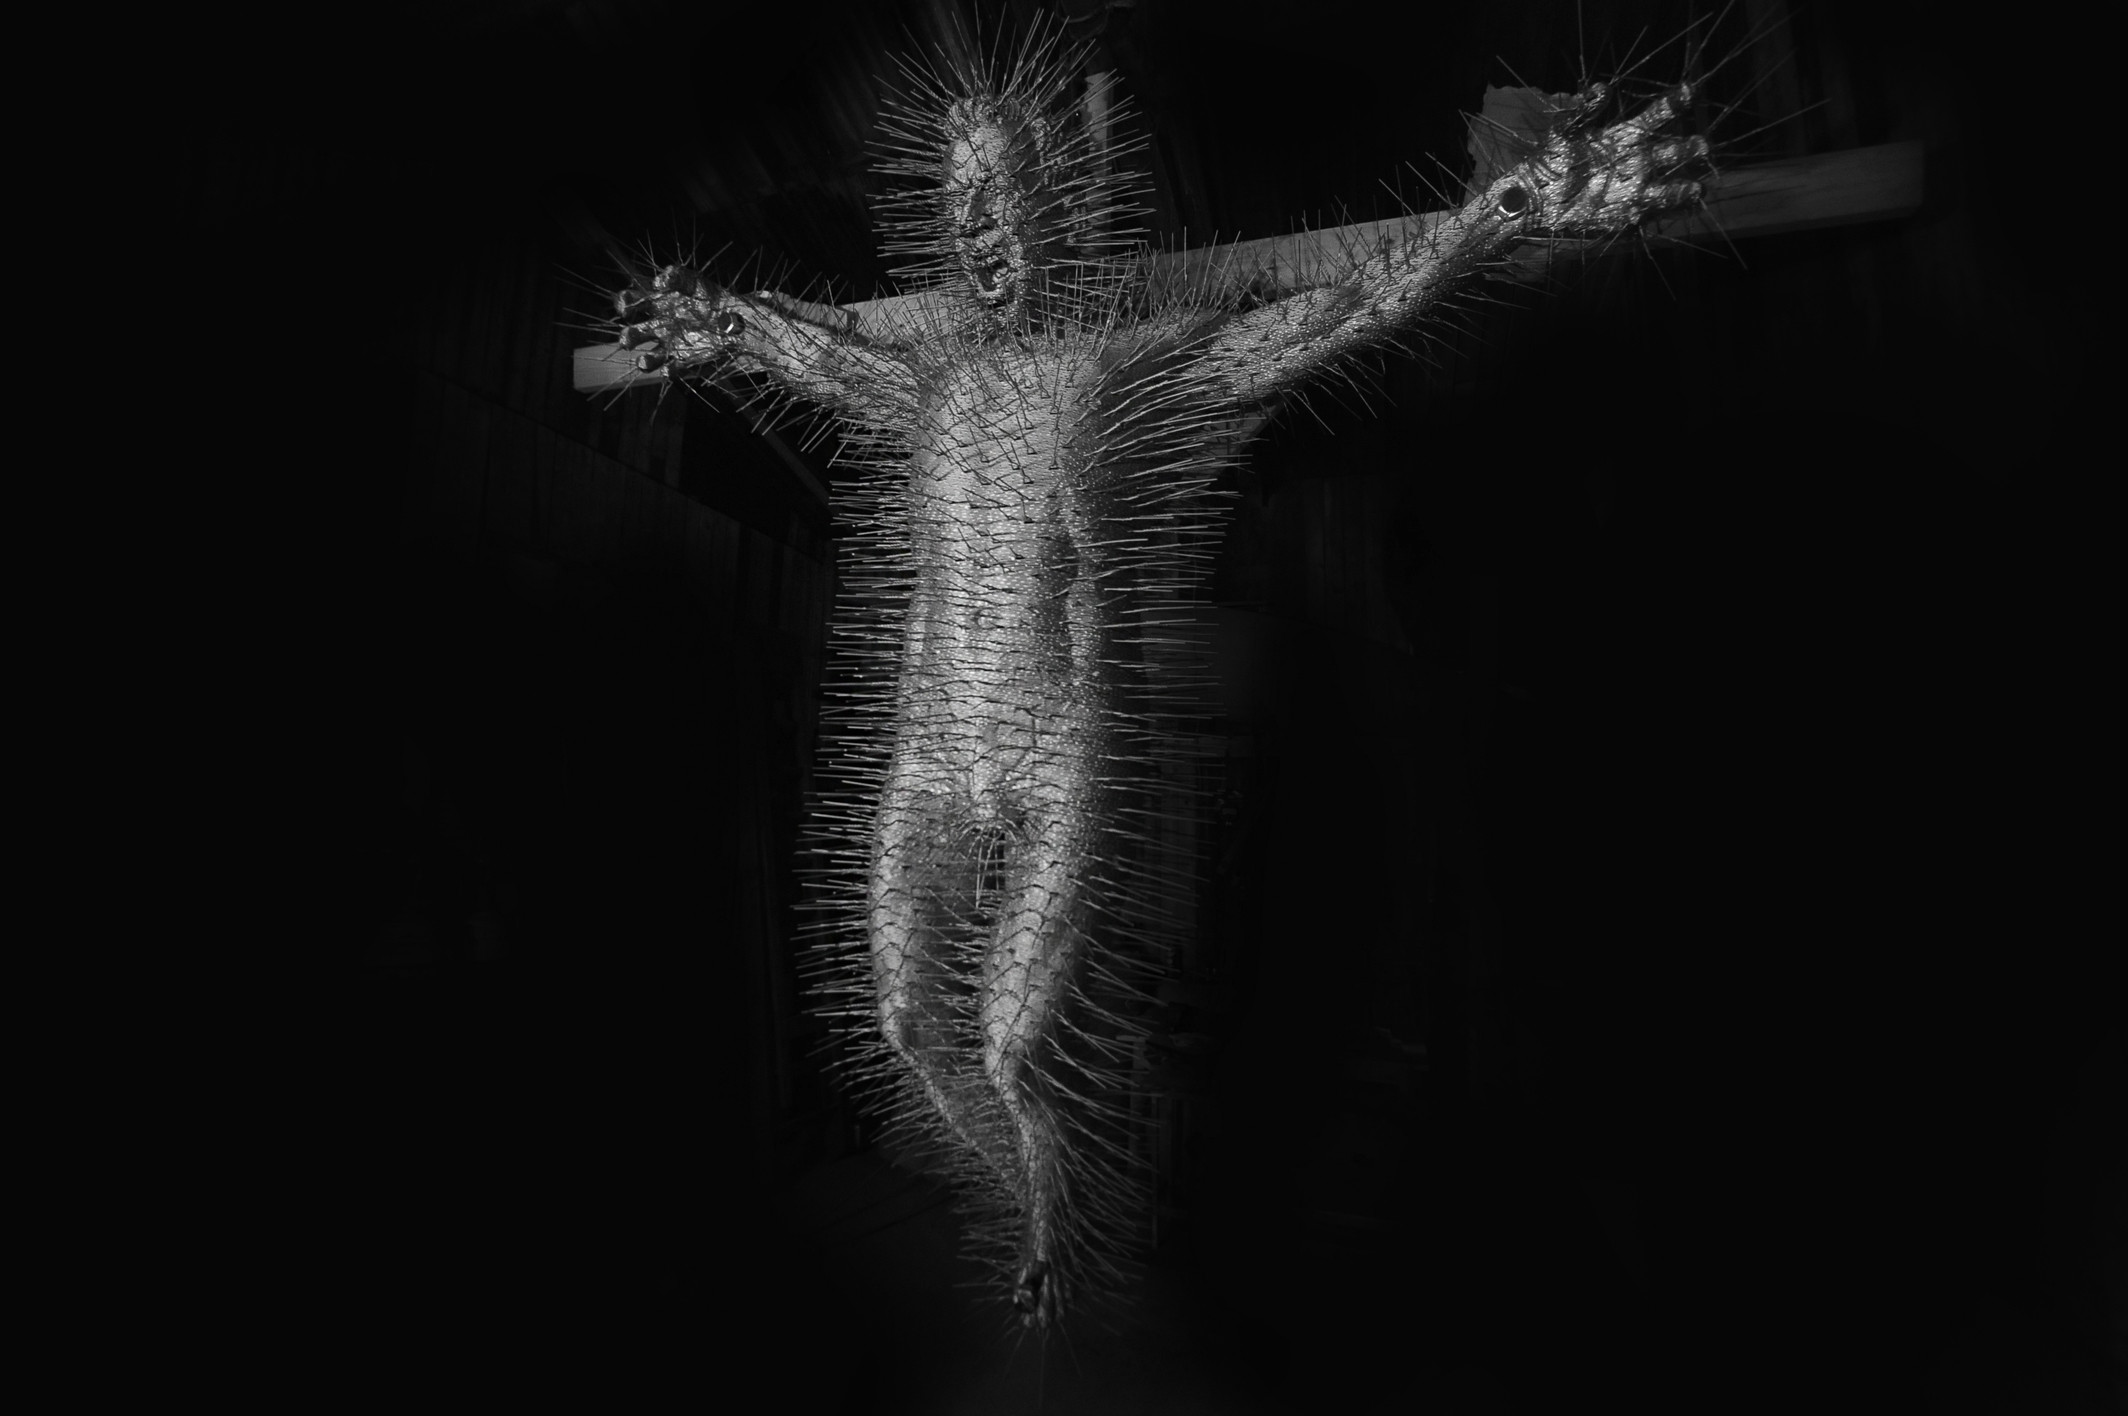 2128x1416 crucifixion-by-David-Mach-wallpaper-wp5404297